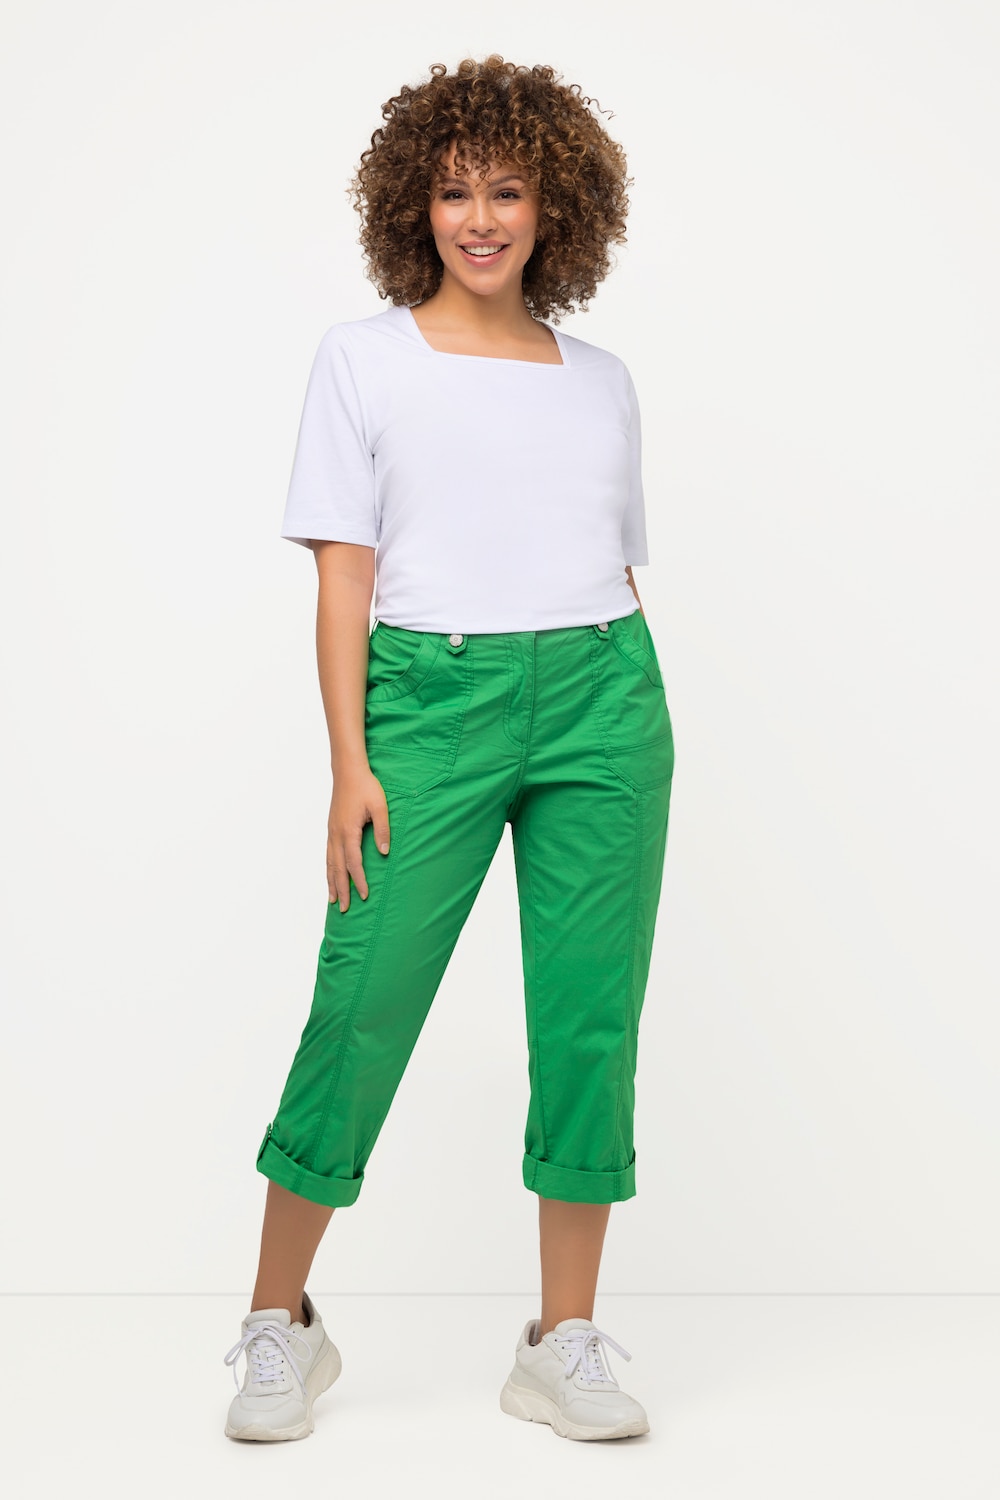 grandes tailles pantalon cargo 7/8 avec attaches, femmes, vert, taille: 64, coton, ulla popken